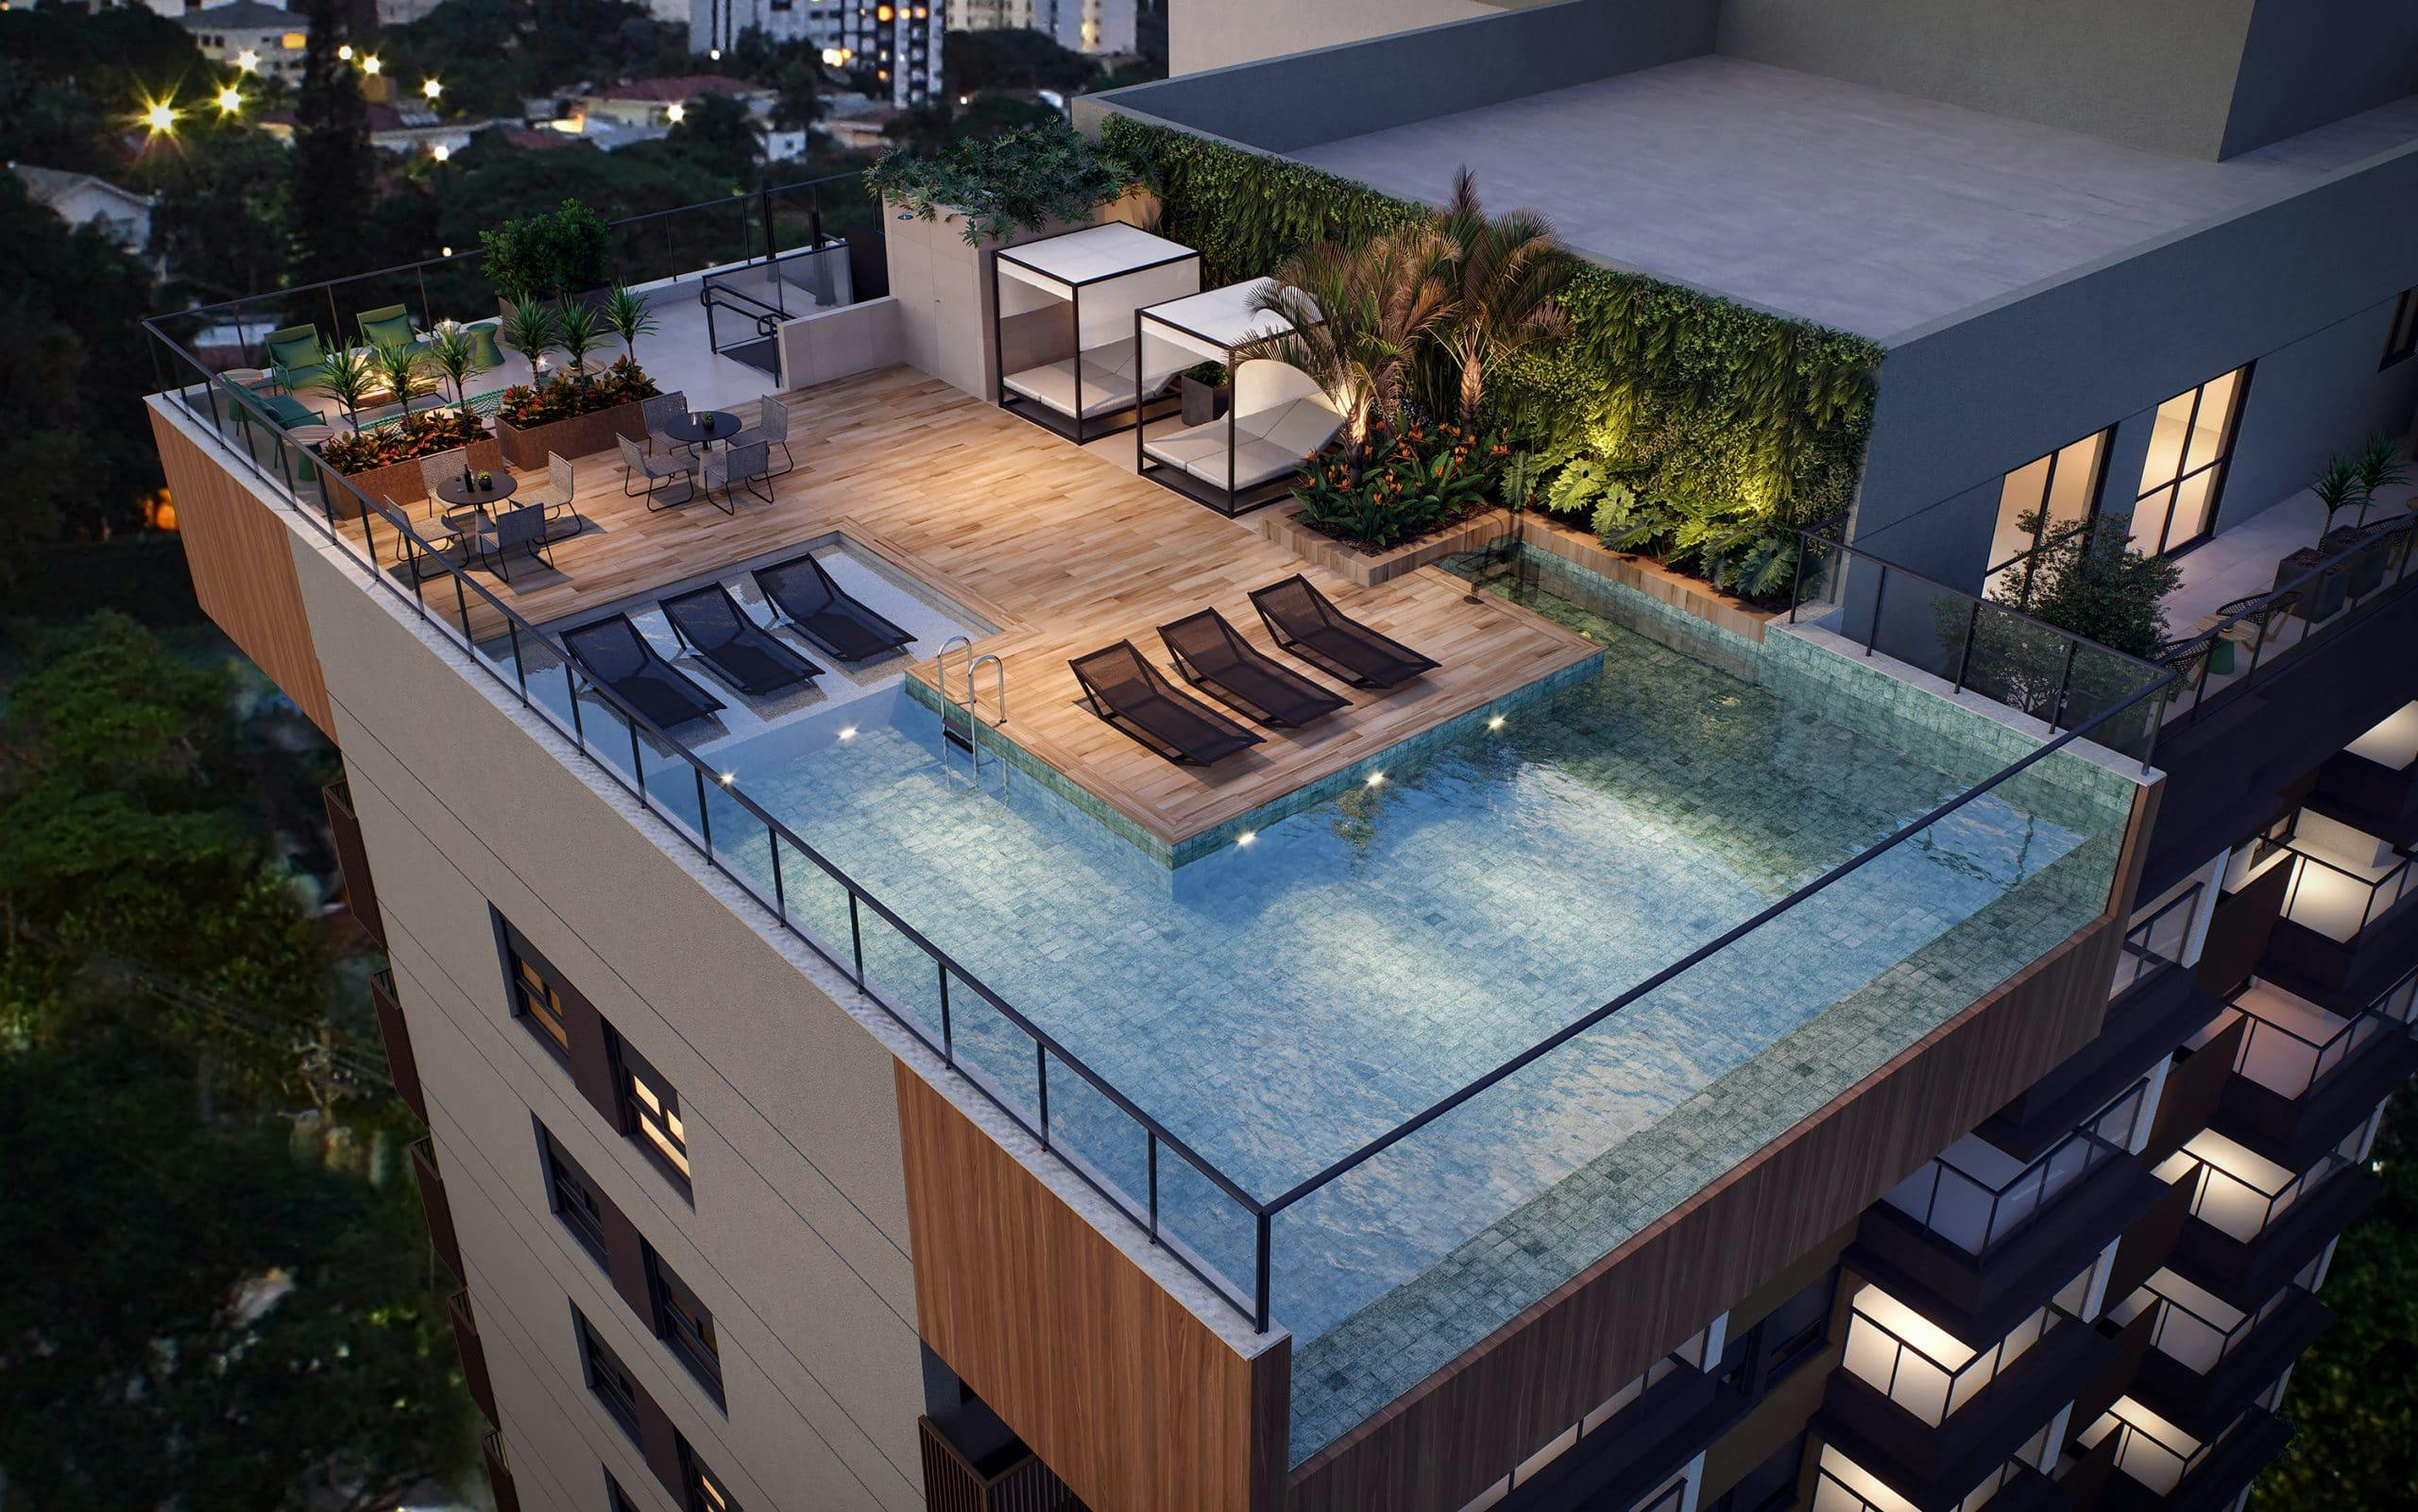 Imagem 3D do Rooftop Pool Residencial